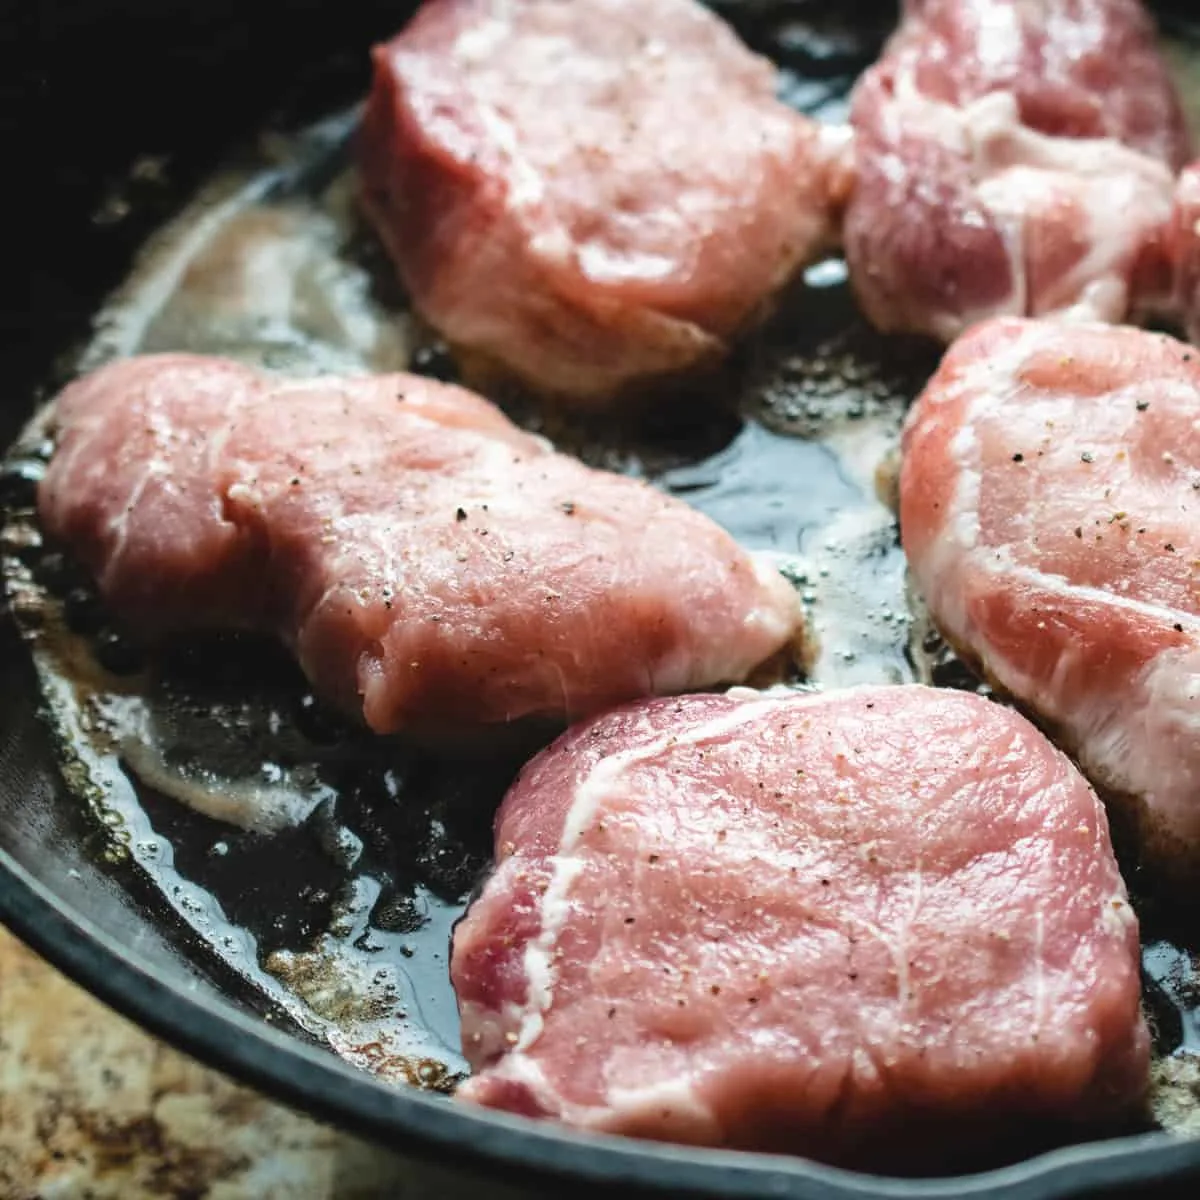 Pork chops searing in a hot skillet. 